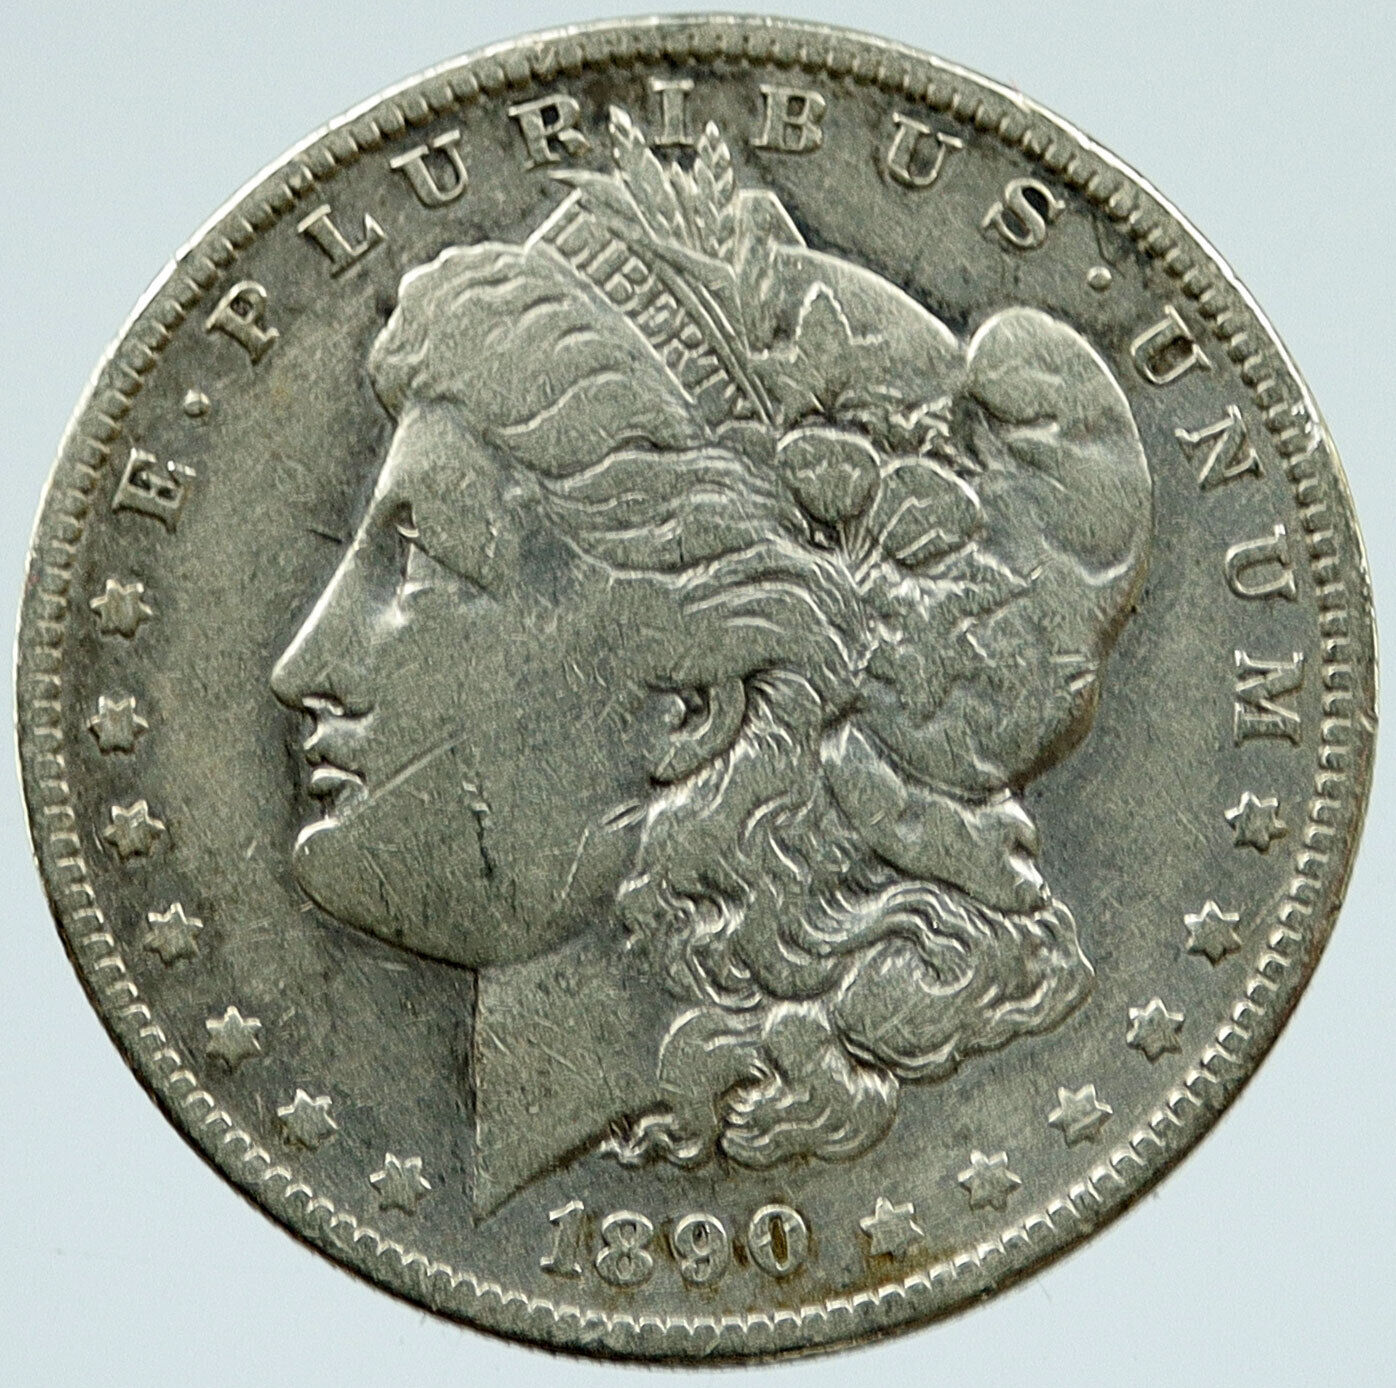 1890 O UNITED STATES of America EAGLE Old SILVER Morgan US Dollar Coin i117124